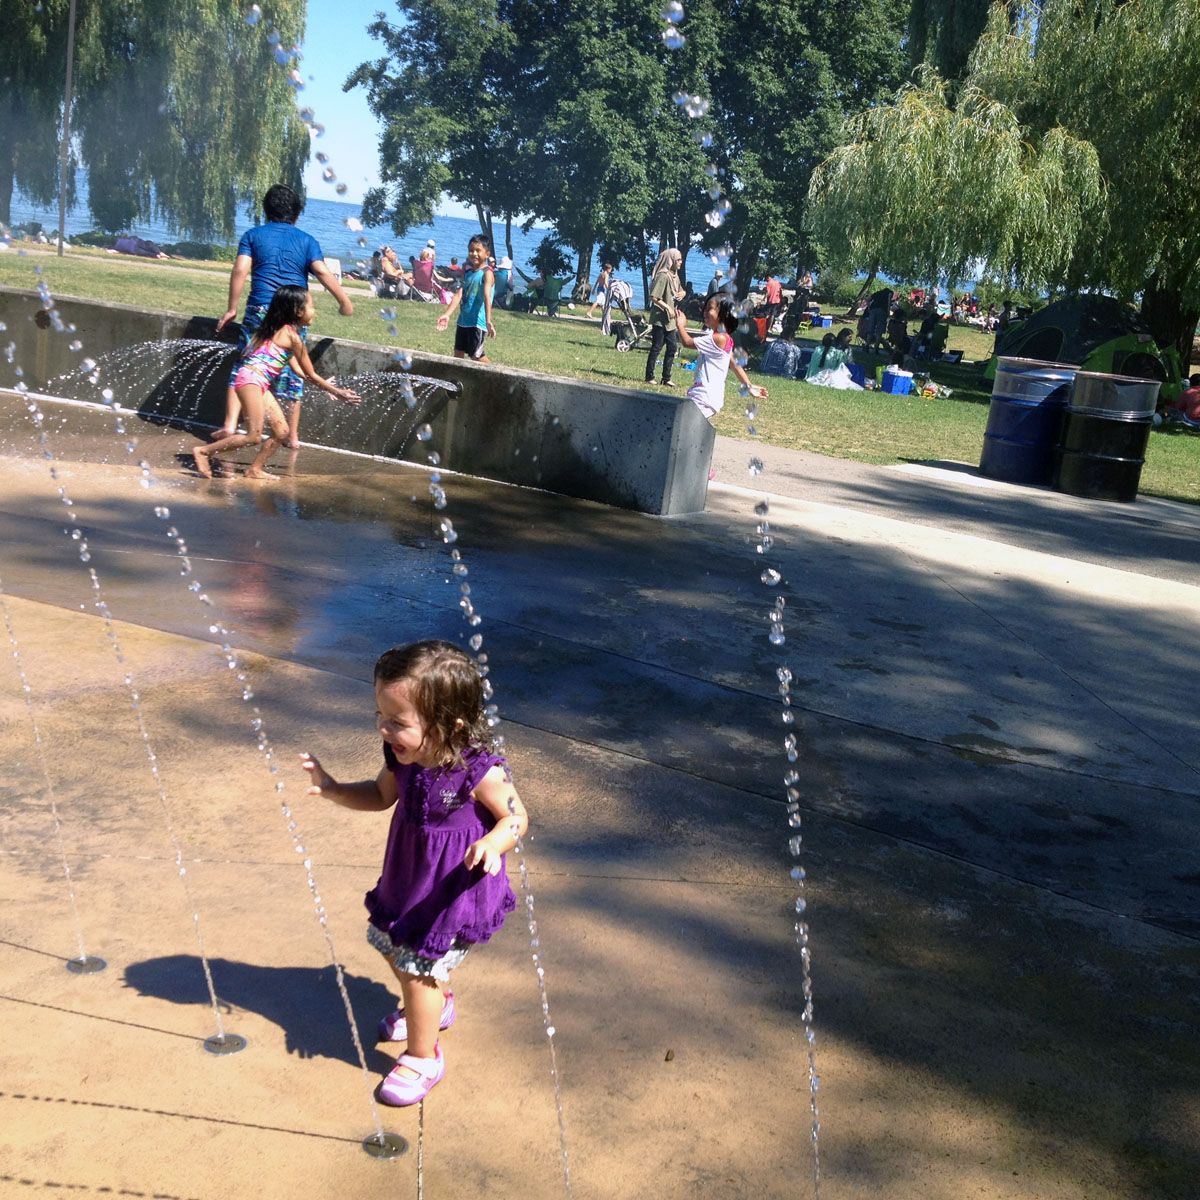 My daugher, Eva, enjoying the splash pad at Jack Darling Park. Photo courtesy Carl Vella